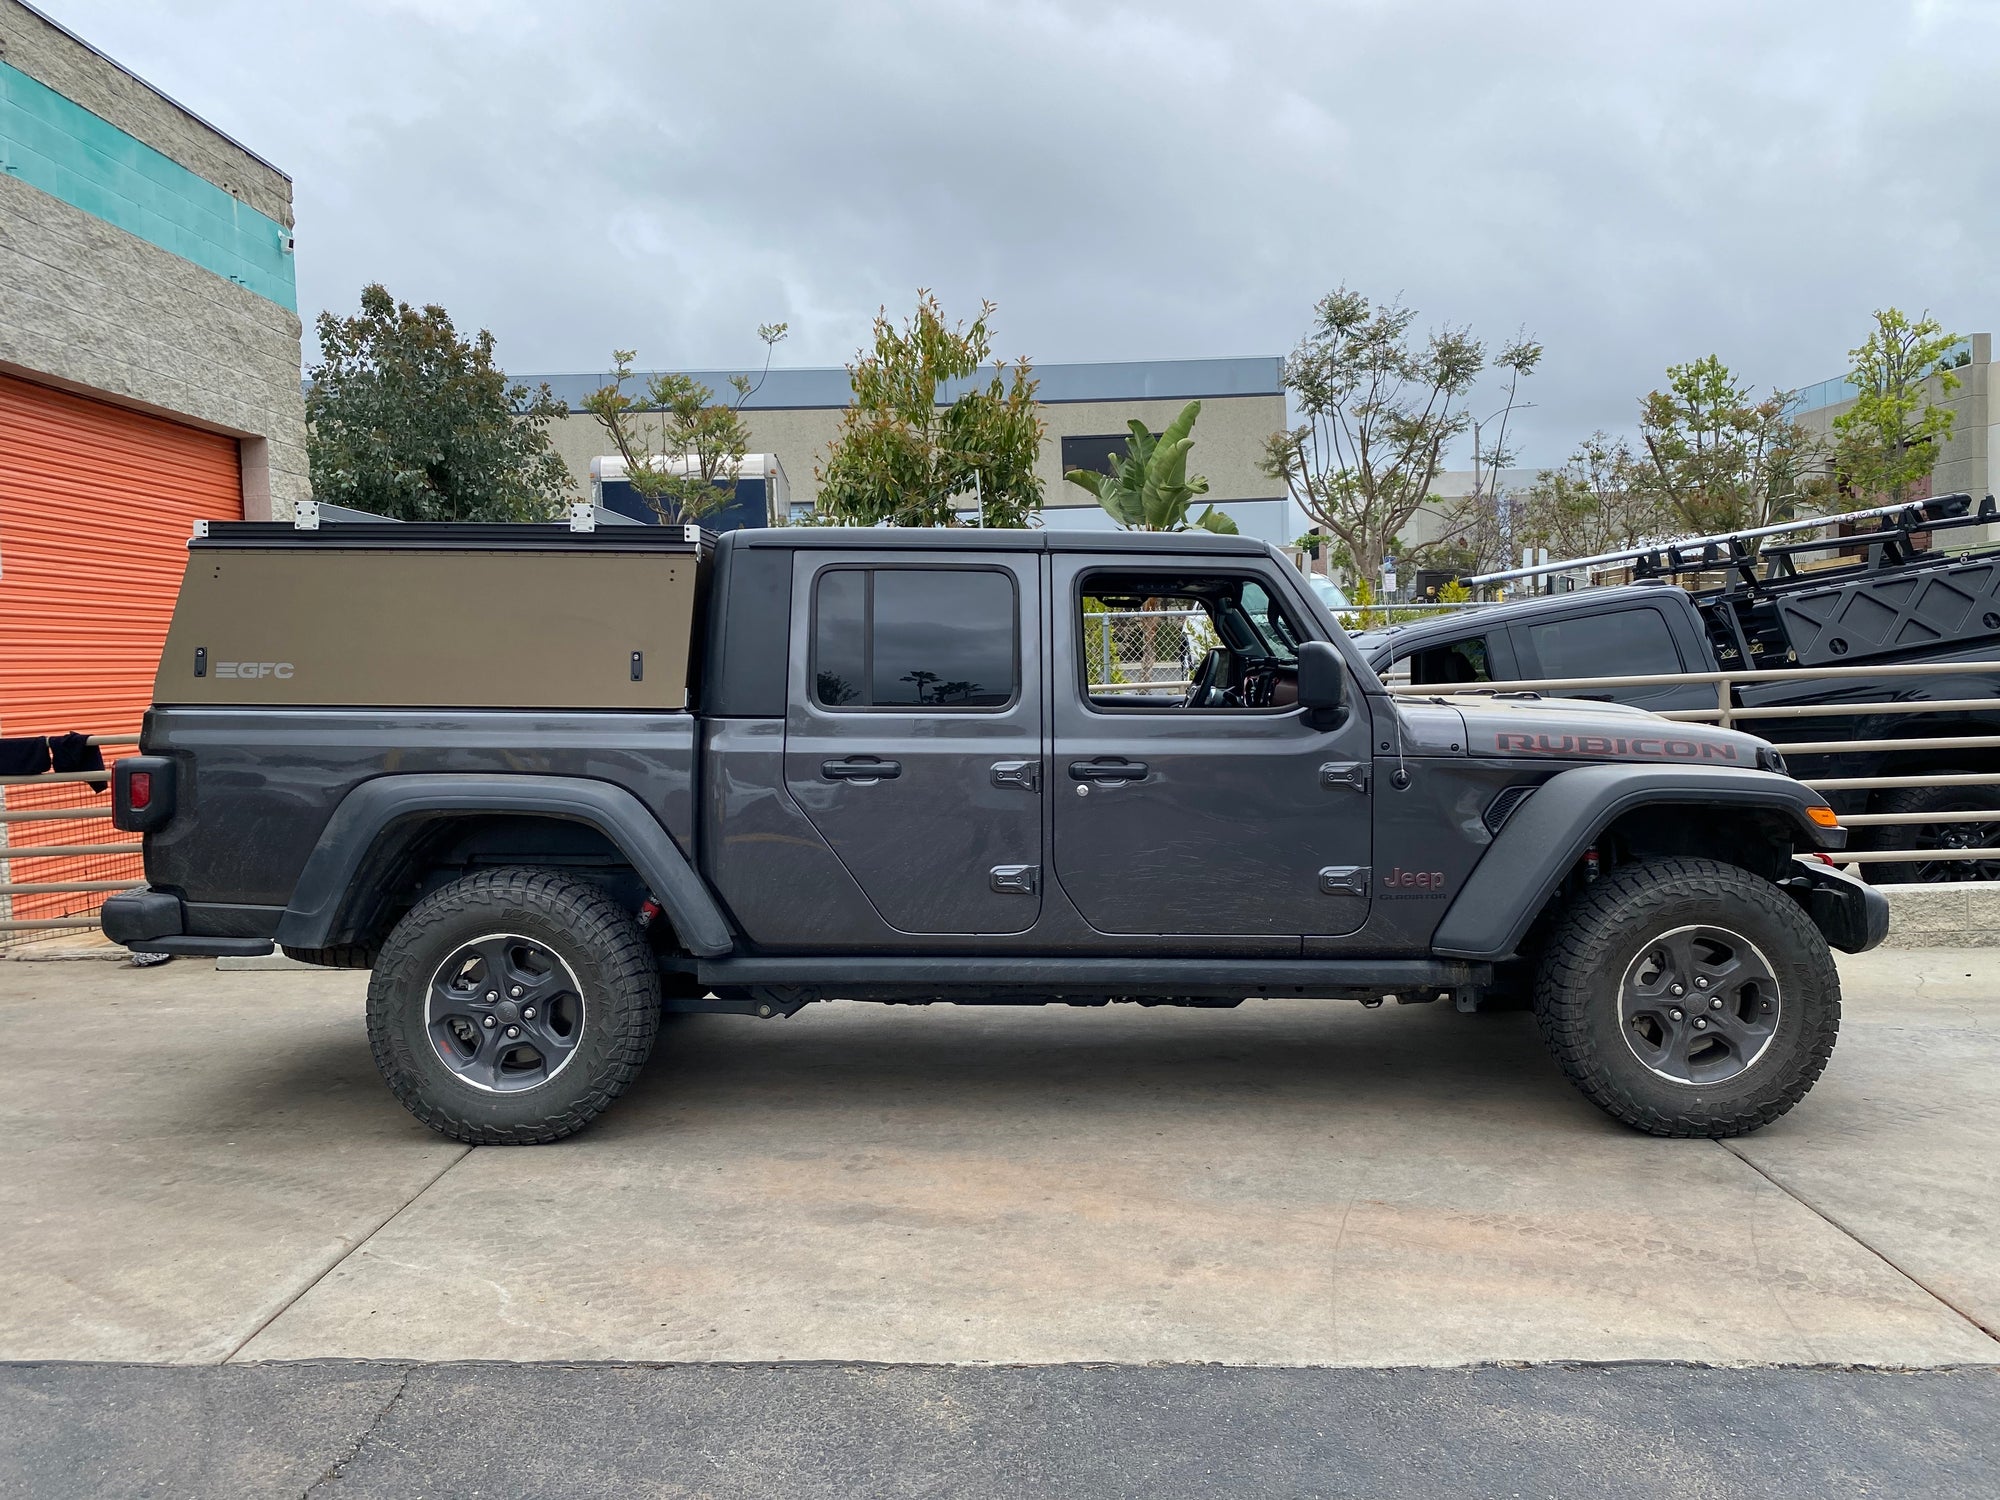 2022 Jeep Gladiator Topper - Build #286